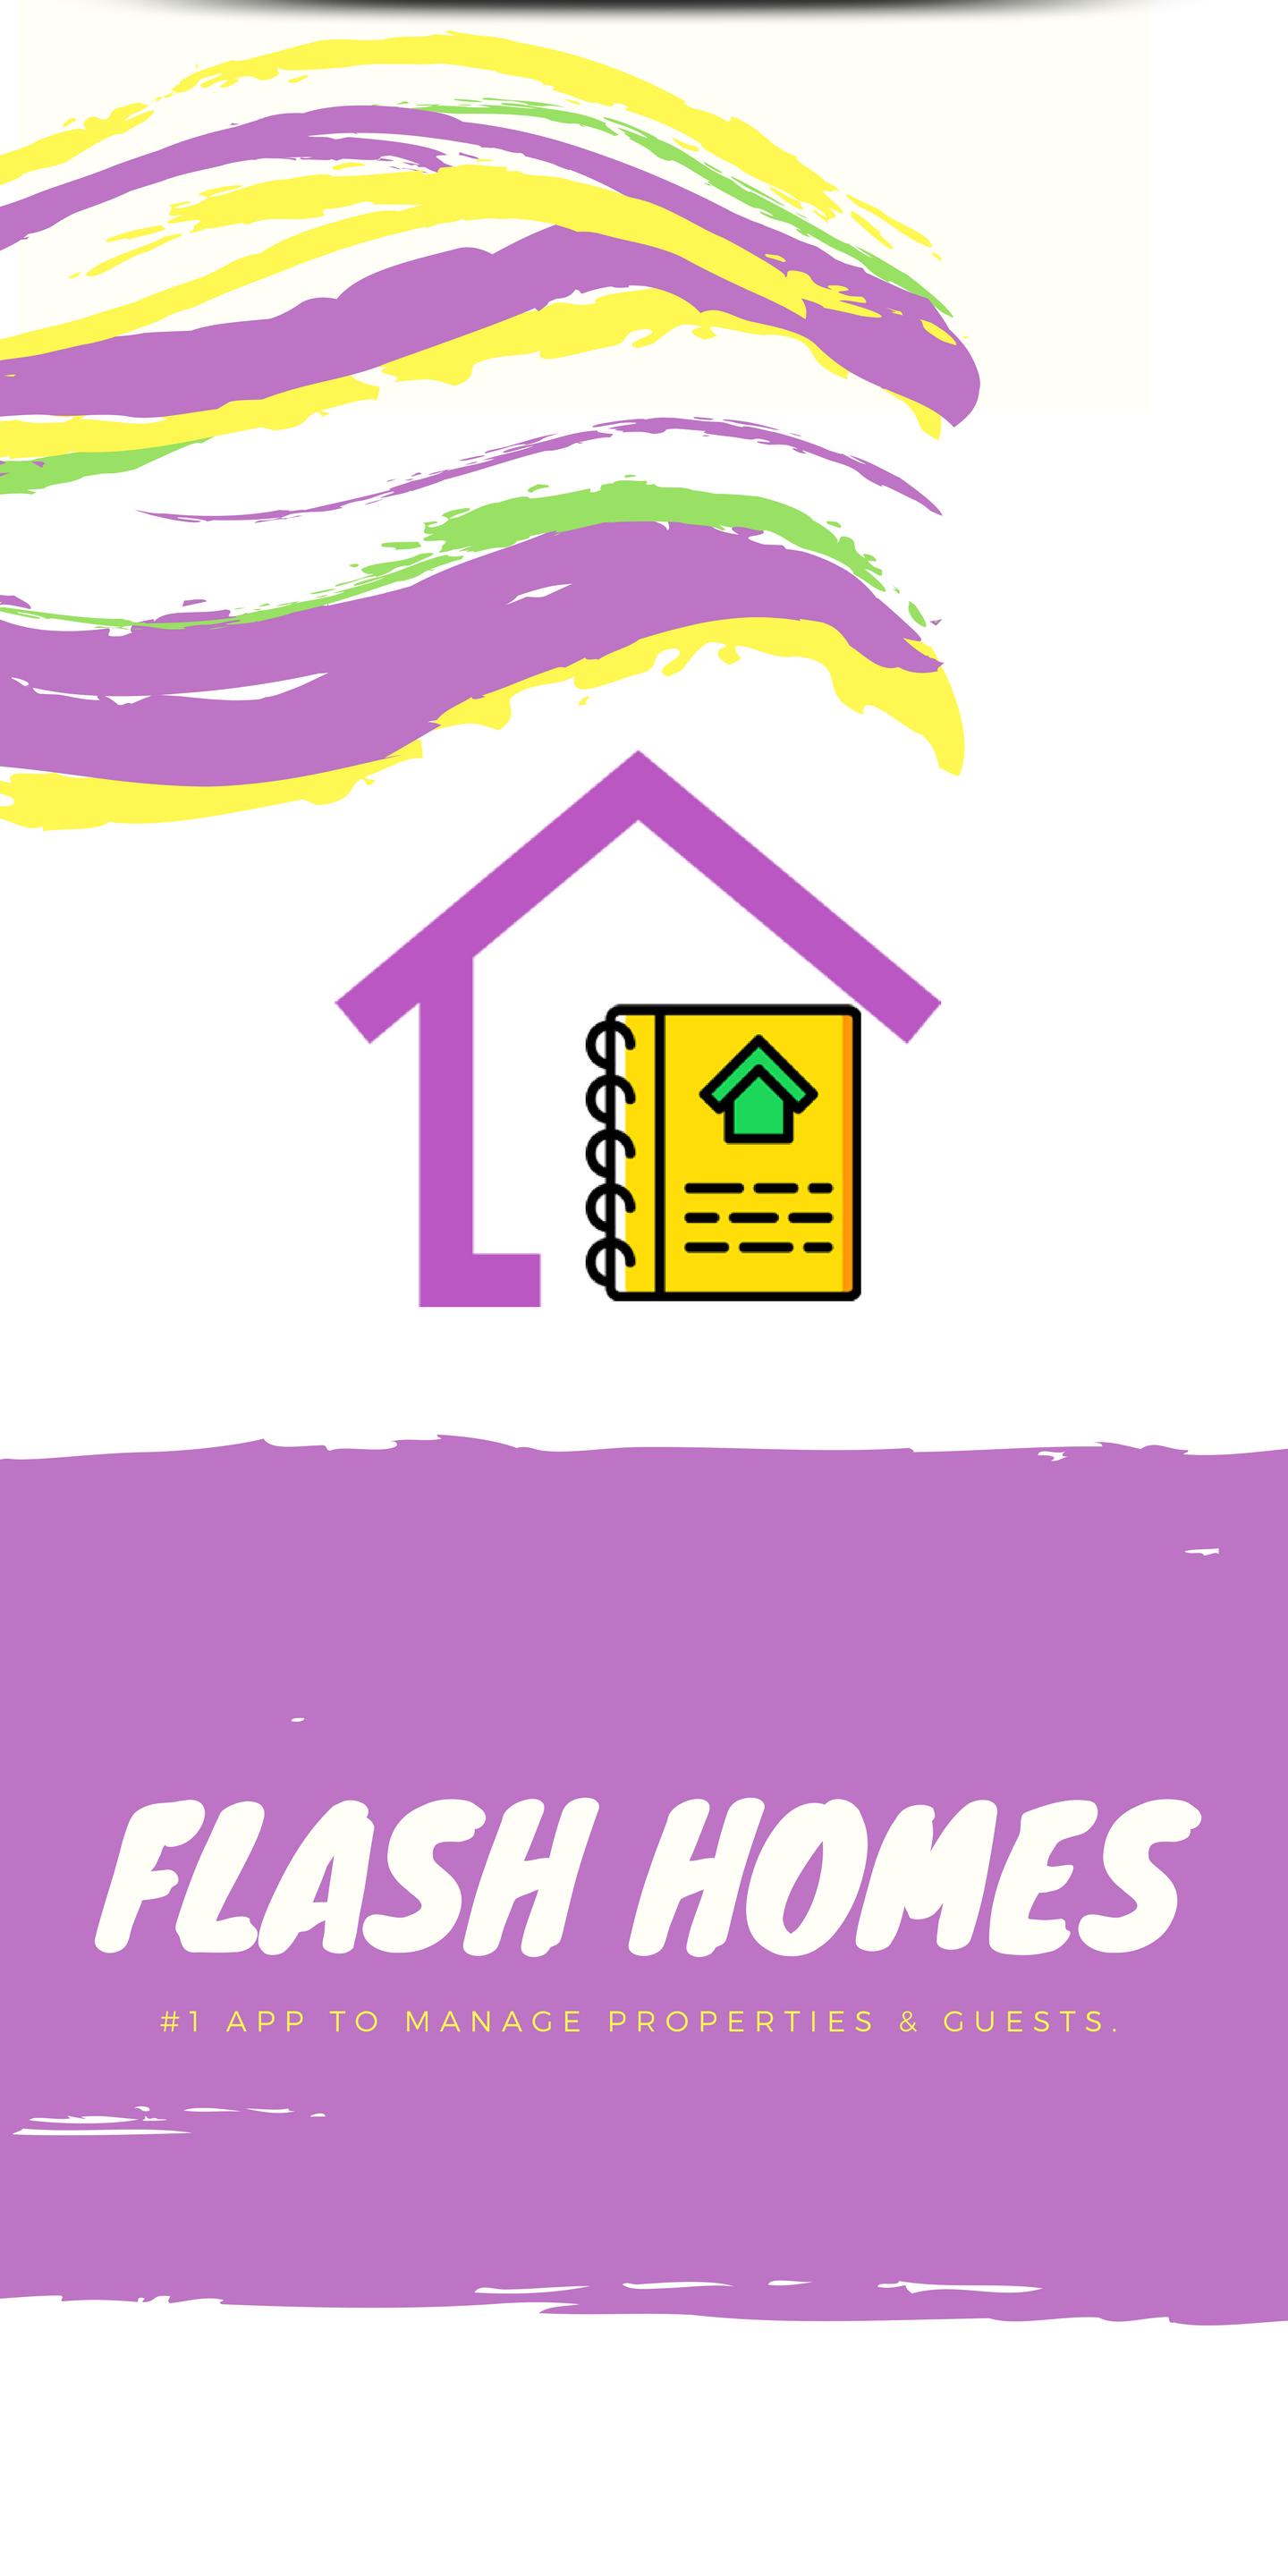 Flash home. Home Flash.